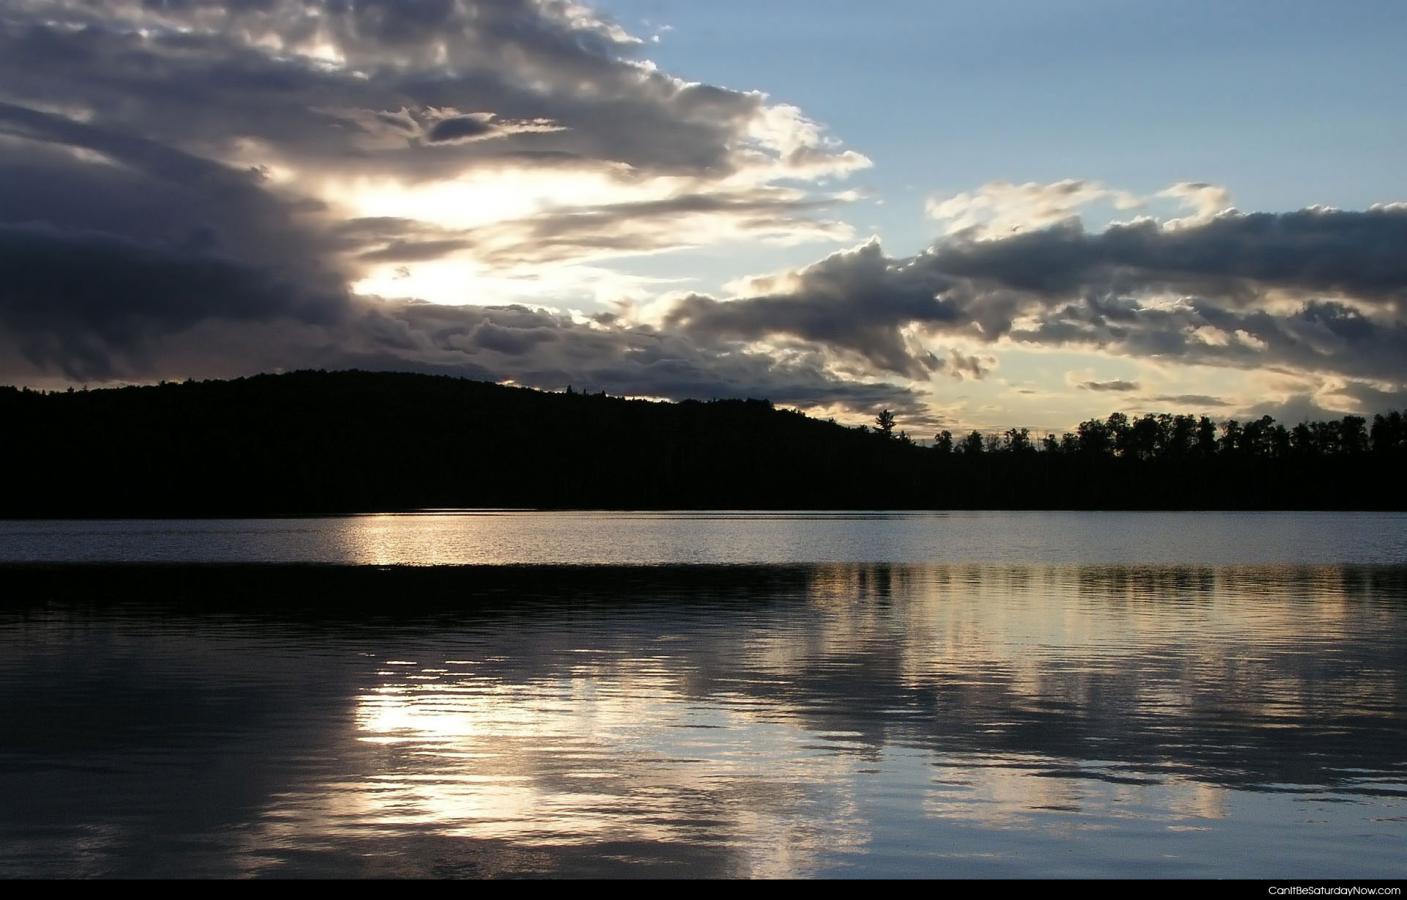 Sunset Lake - Sunset over a calm lake